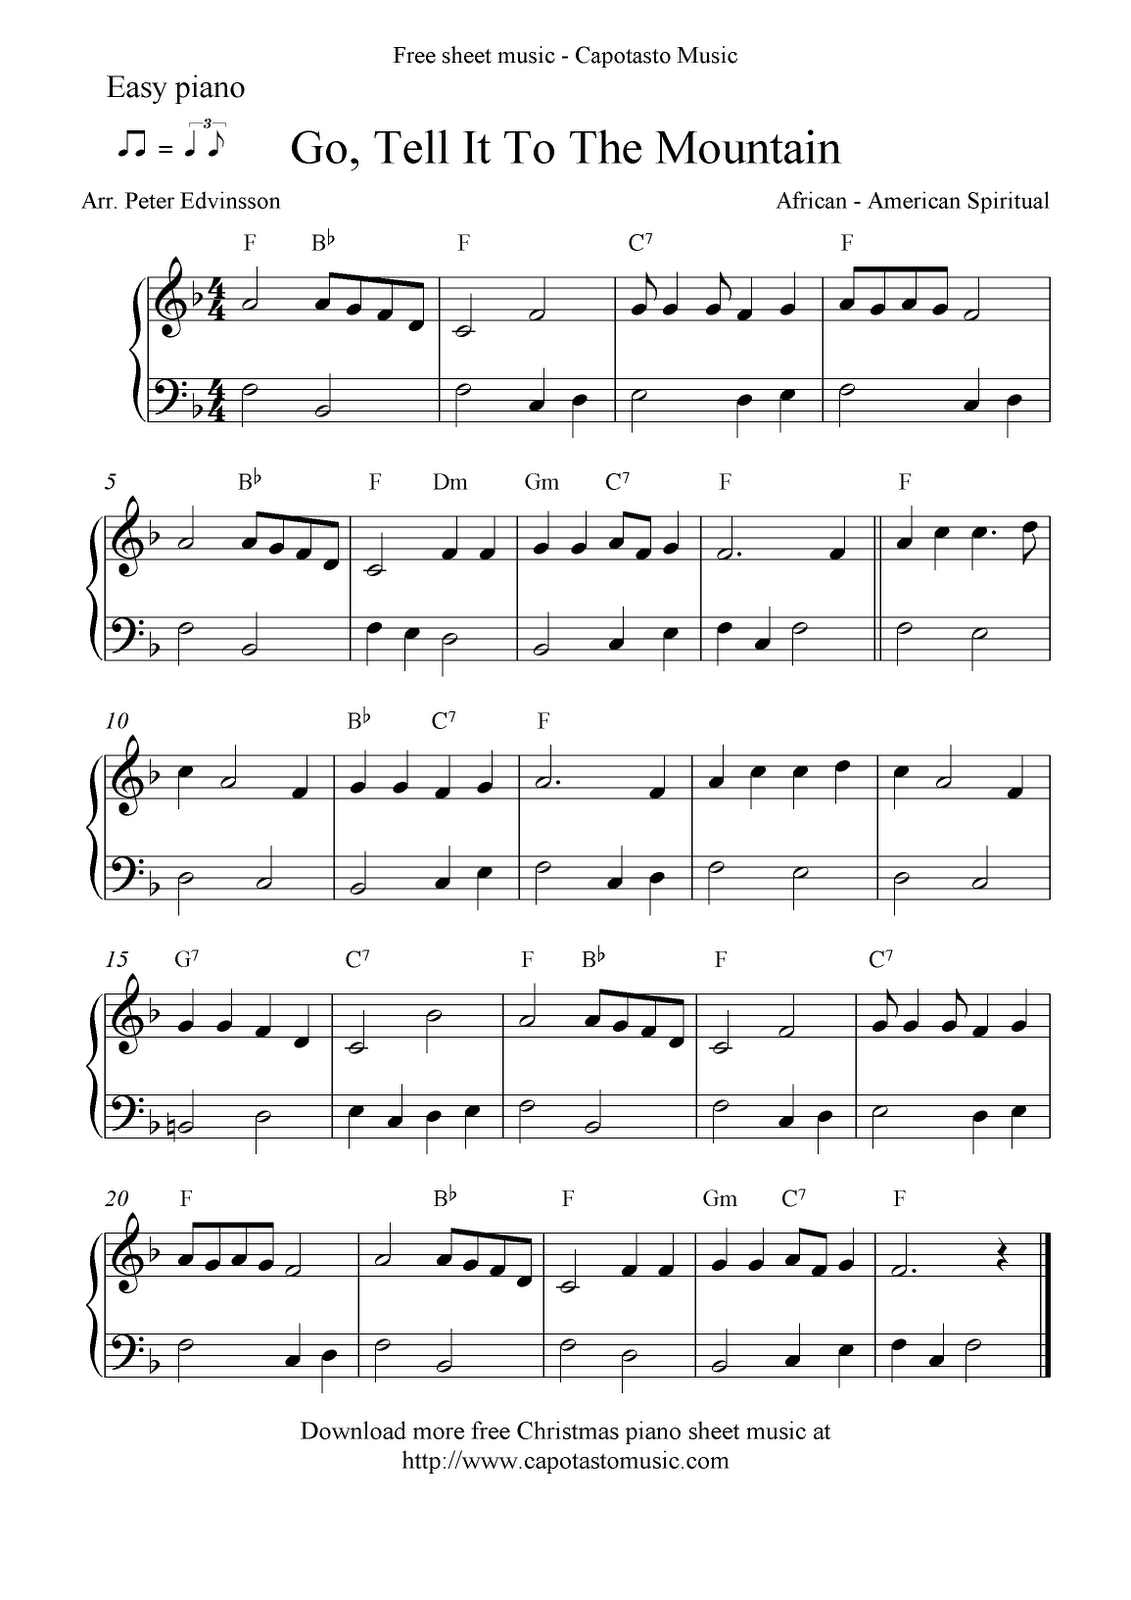 Free Printable Piano Sheet Music | Free Sheet Music Scores: Easy - Free Printable Sheet Music For Piano